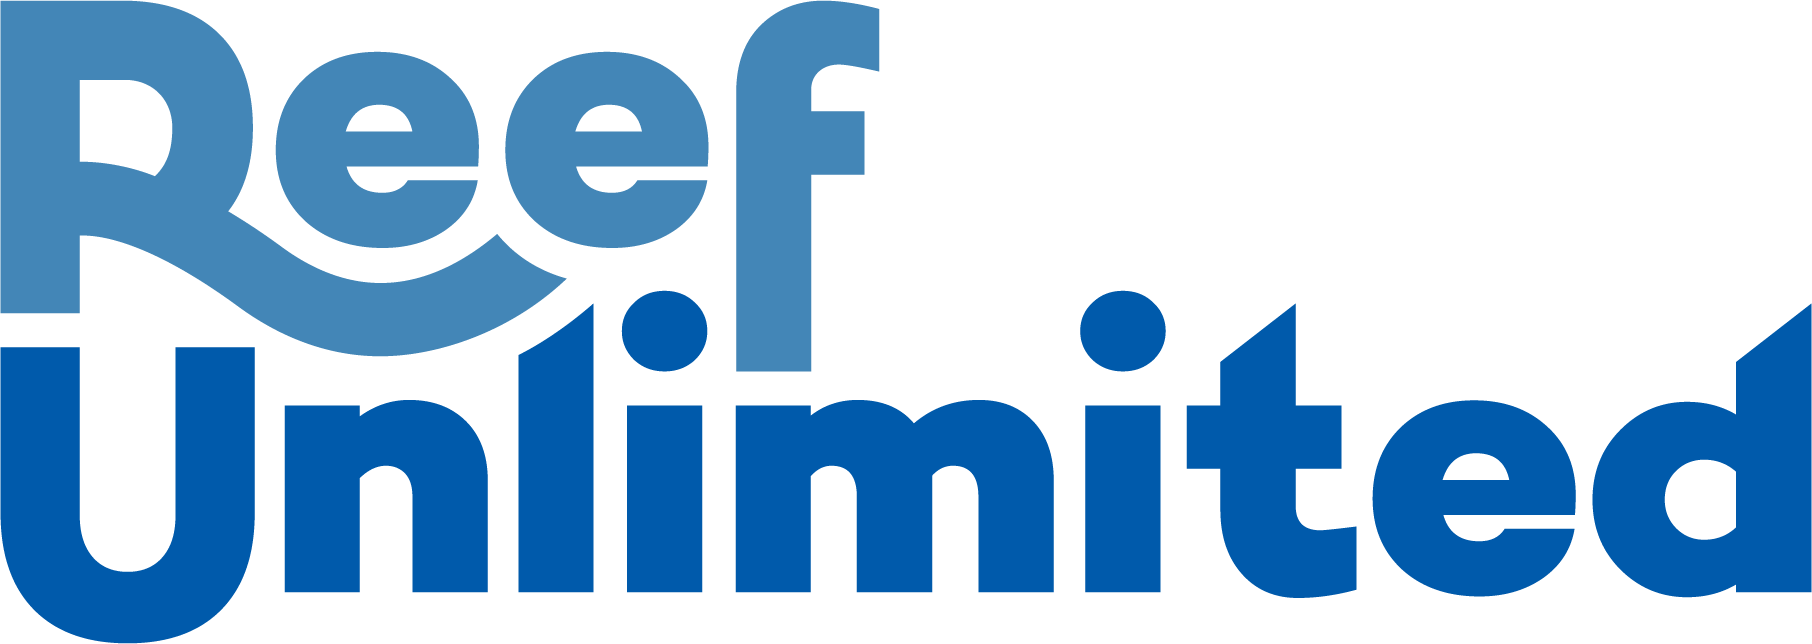 Reef unlimited logo